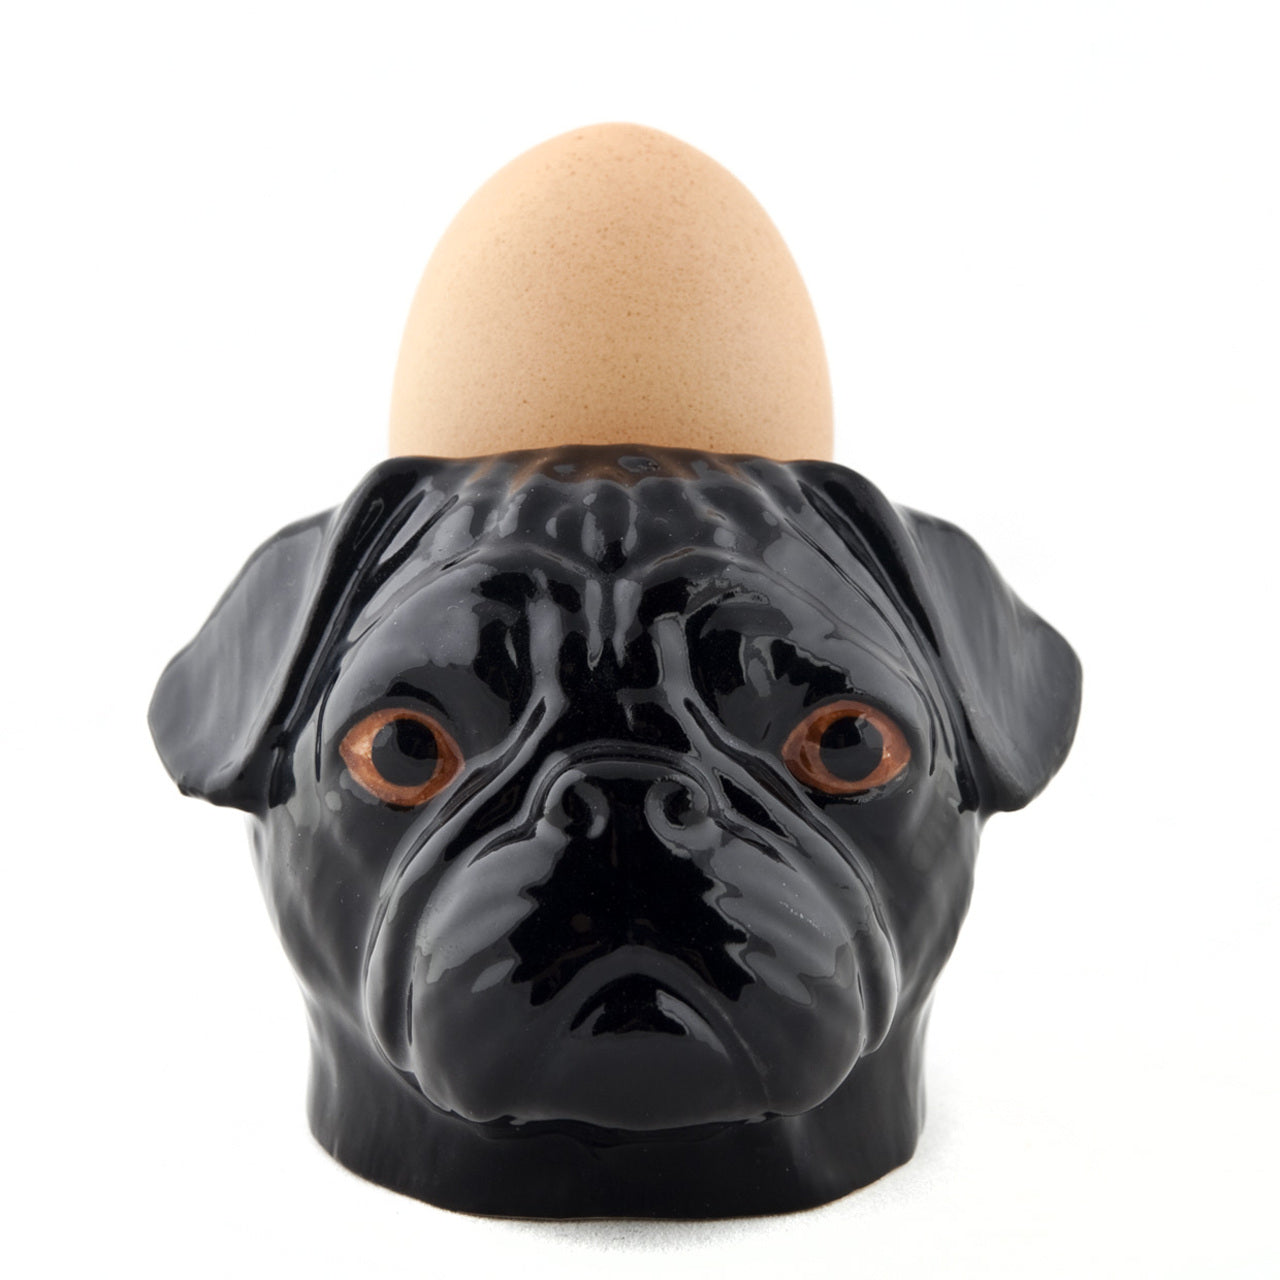 Black Pug Face Egg Cup